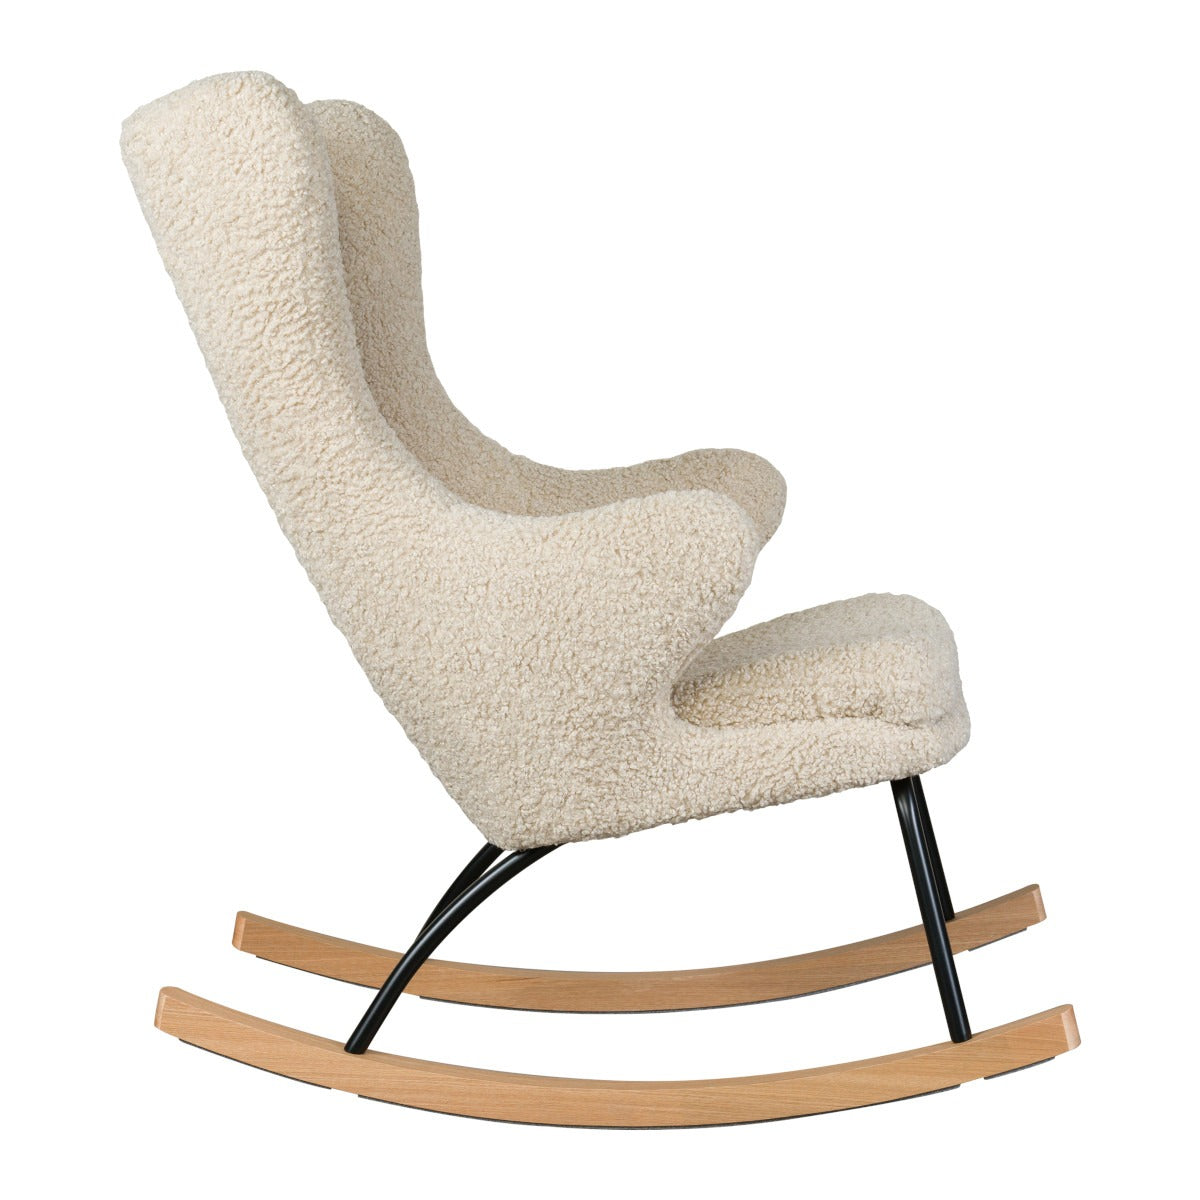 Quax Rocking Nursing Chair – Sheep NEW textured fabric - Tiny Tots Baby Store 